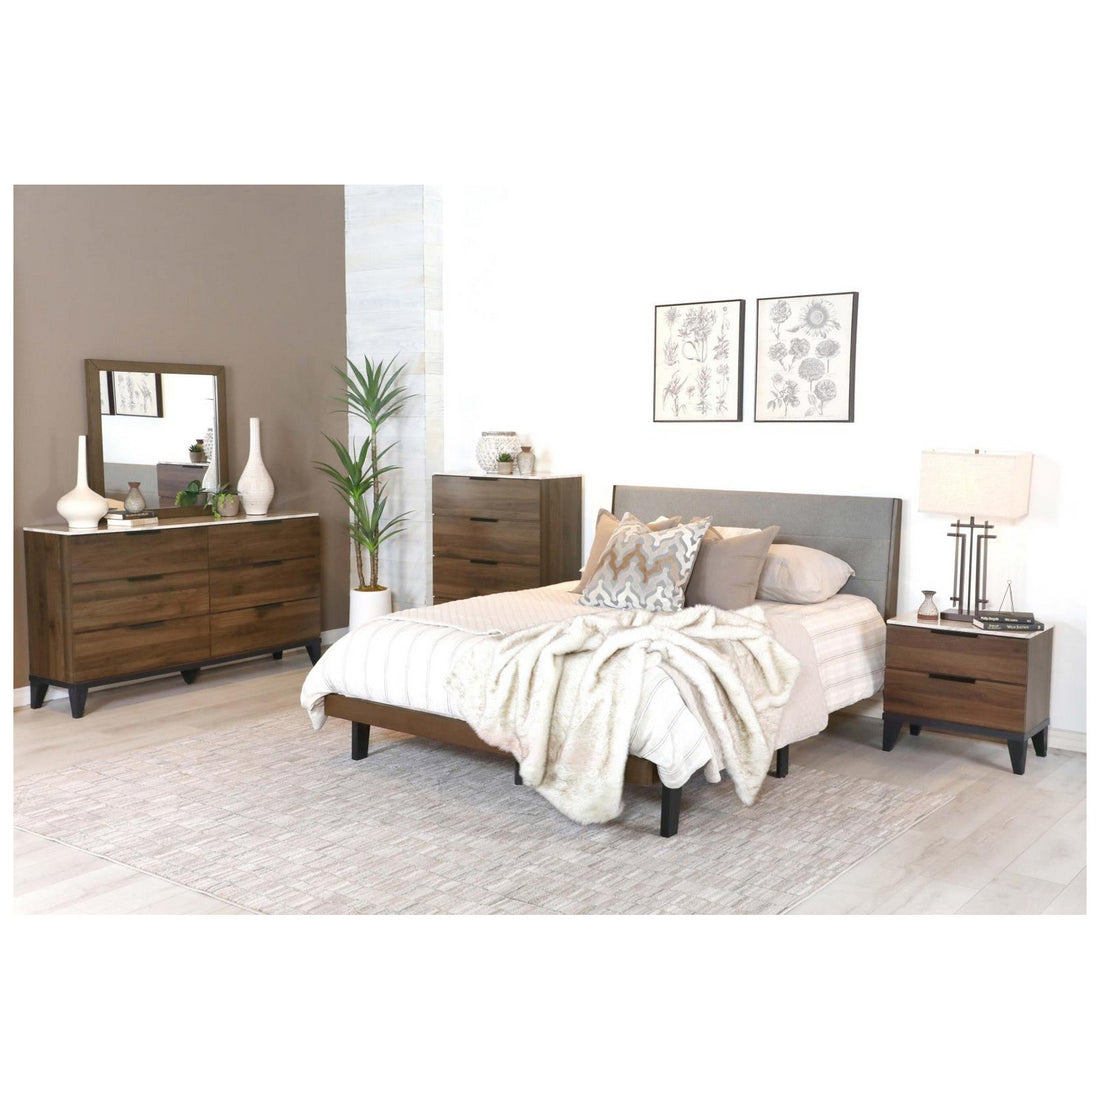 Mays 5-piece Upholstered Eastern King Bedroom Set Walnut Brown and Grey 215961KE-S5